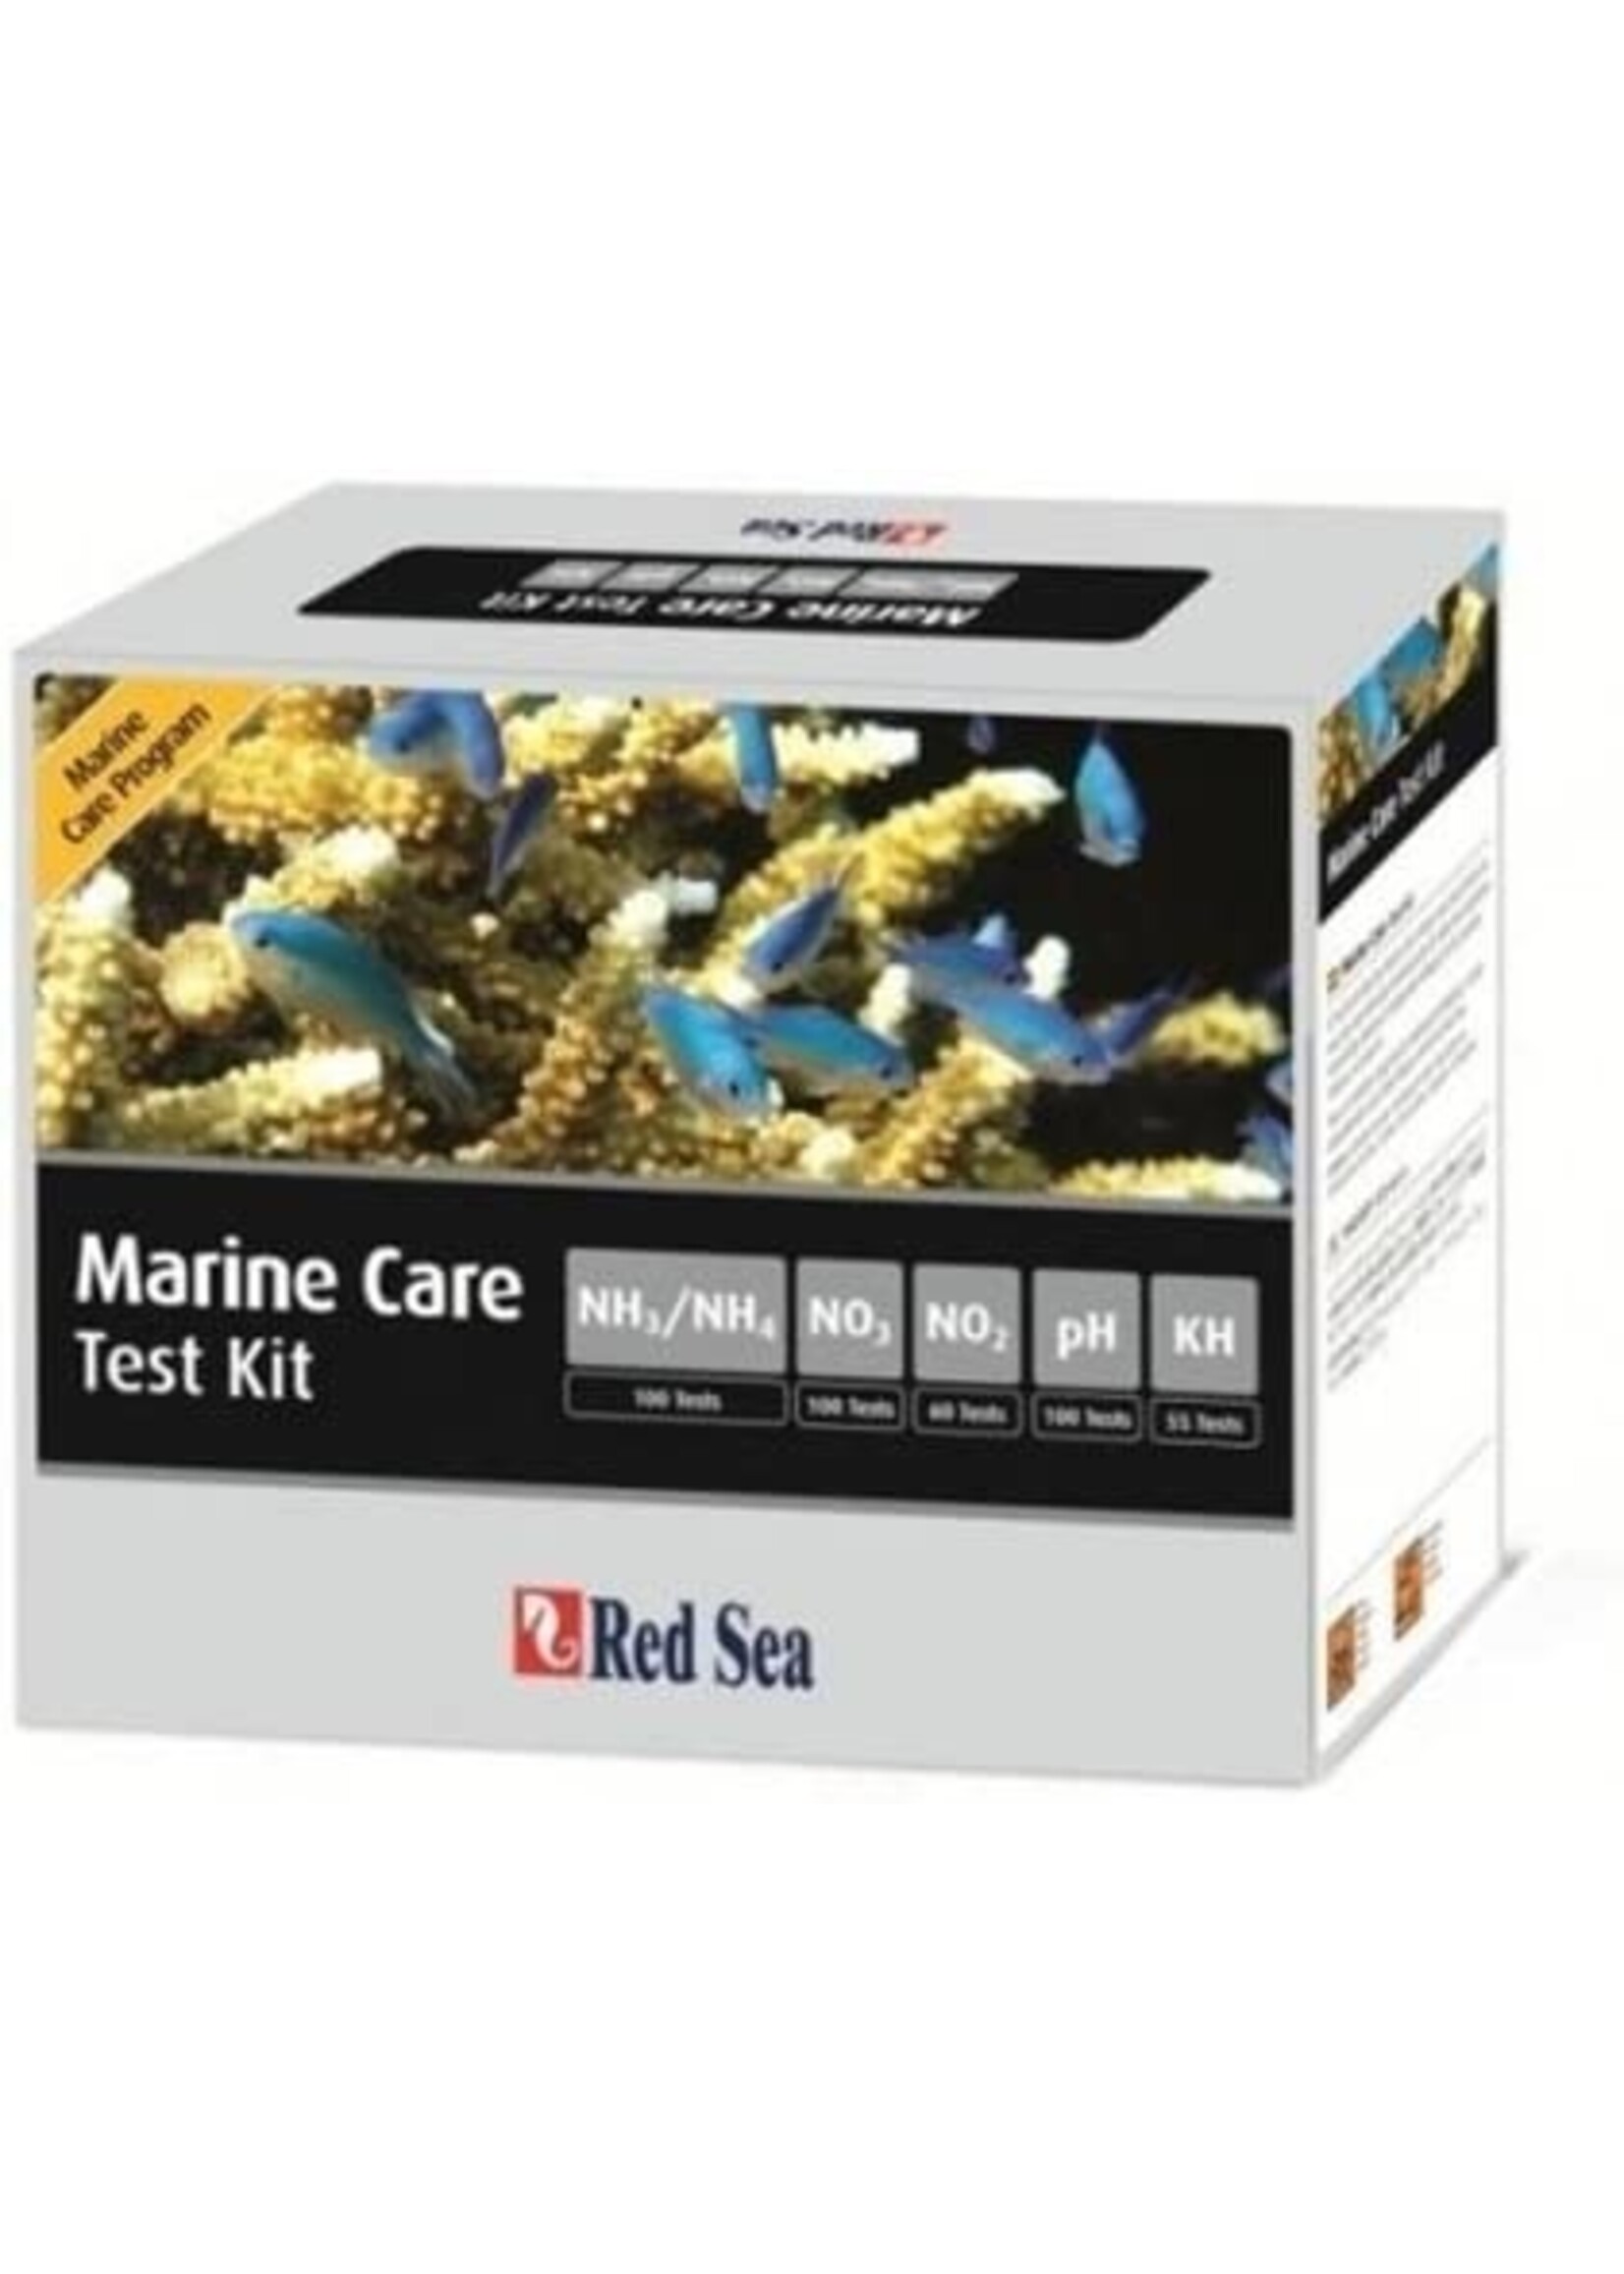 Red Sea Red Sea Marine Care Program Test Kit Complete